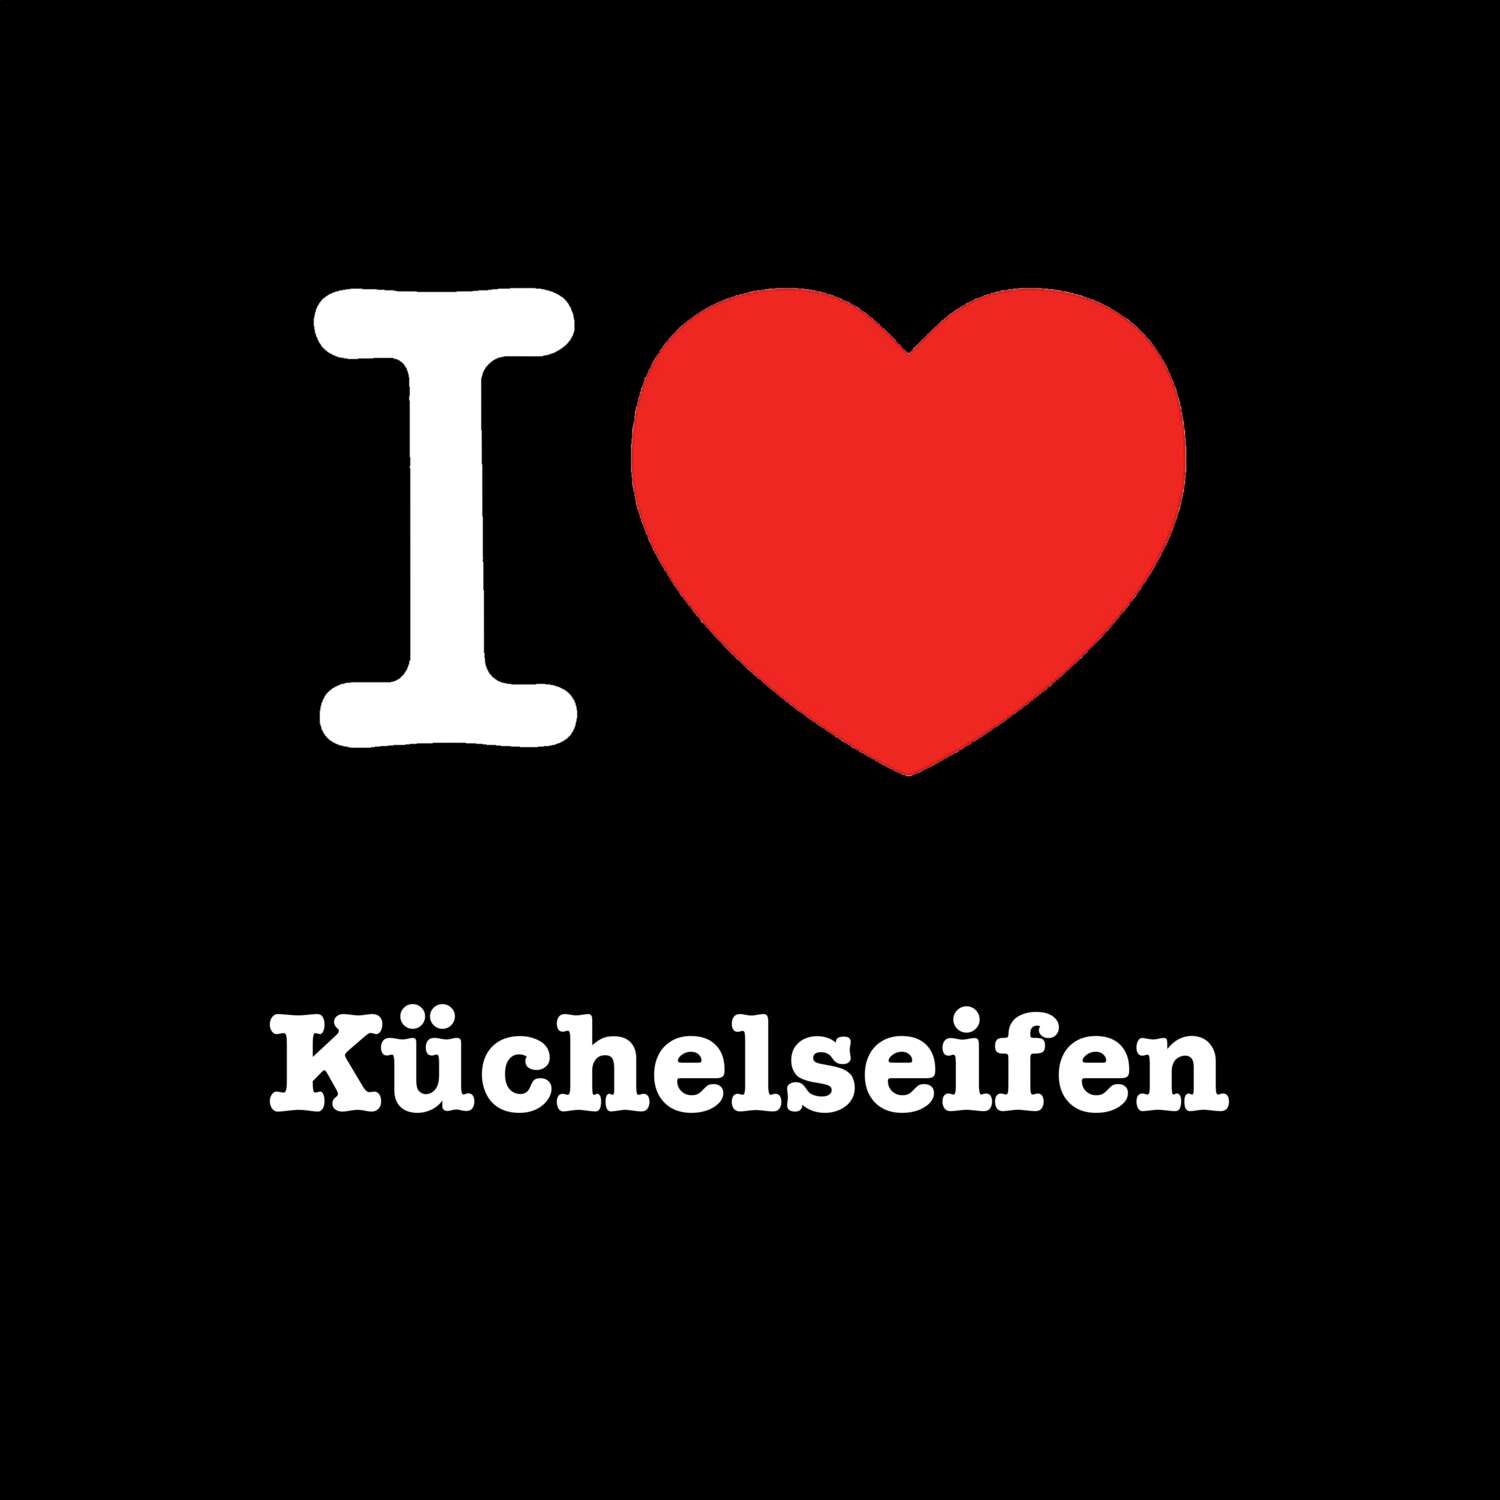 Küchelseifen T-Shirt »I love«